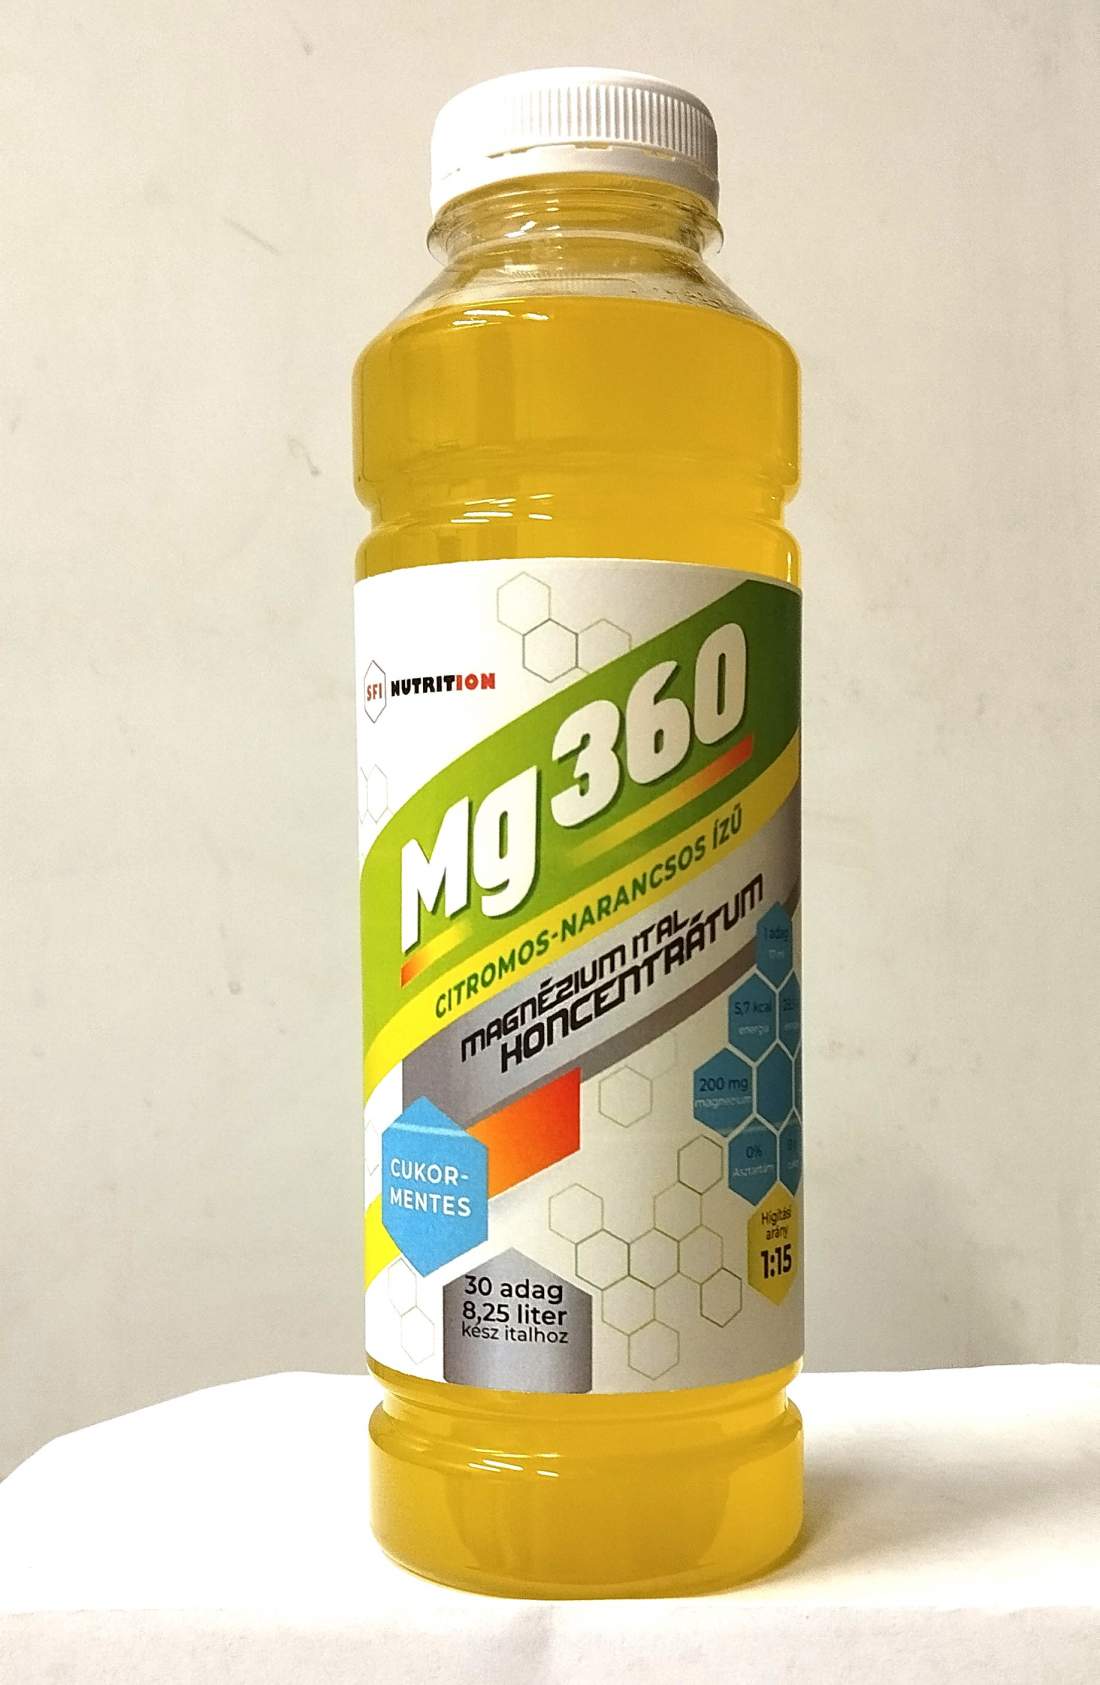 Mg 360 cukormentes magnézium koncentrátum citromos ízű